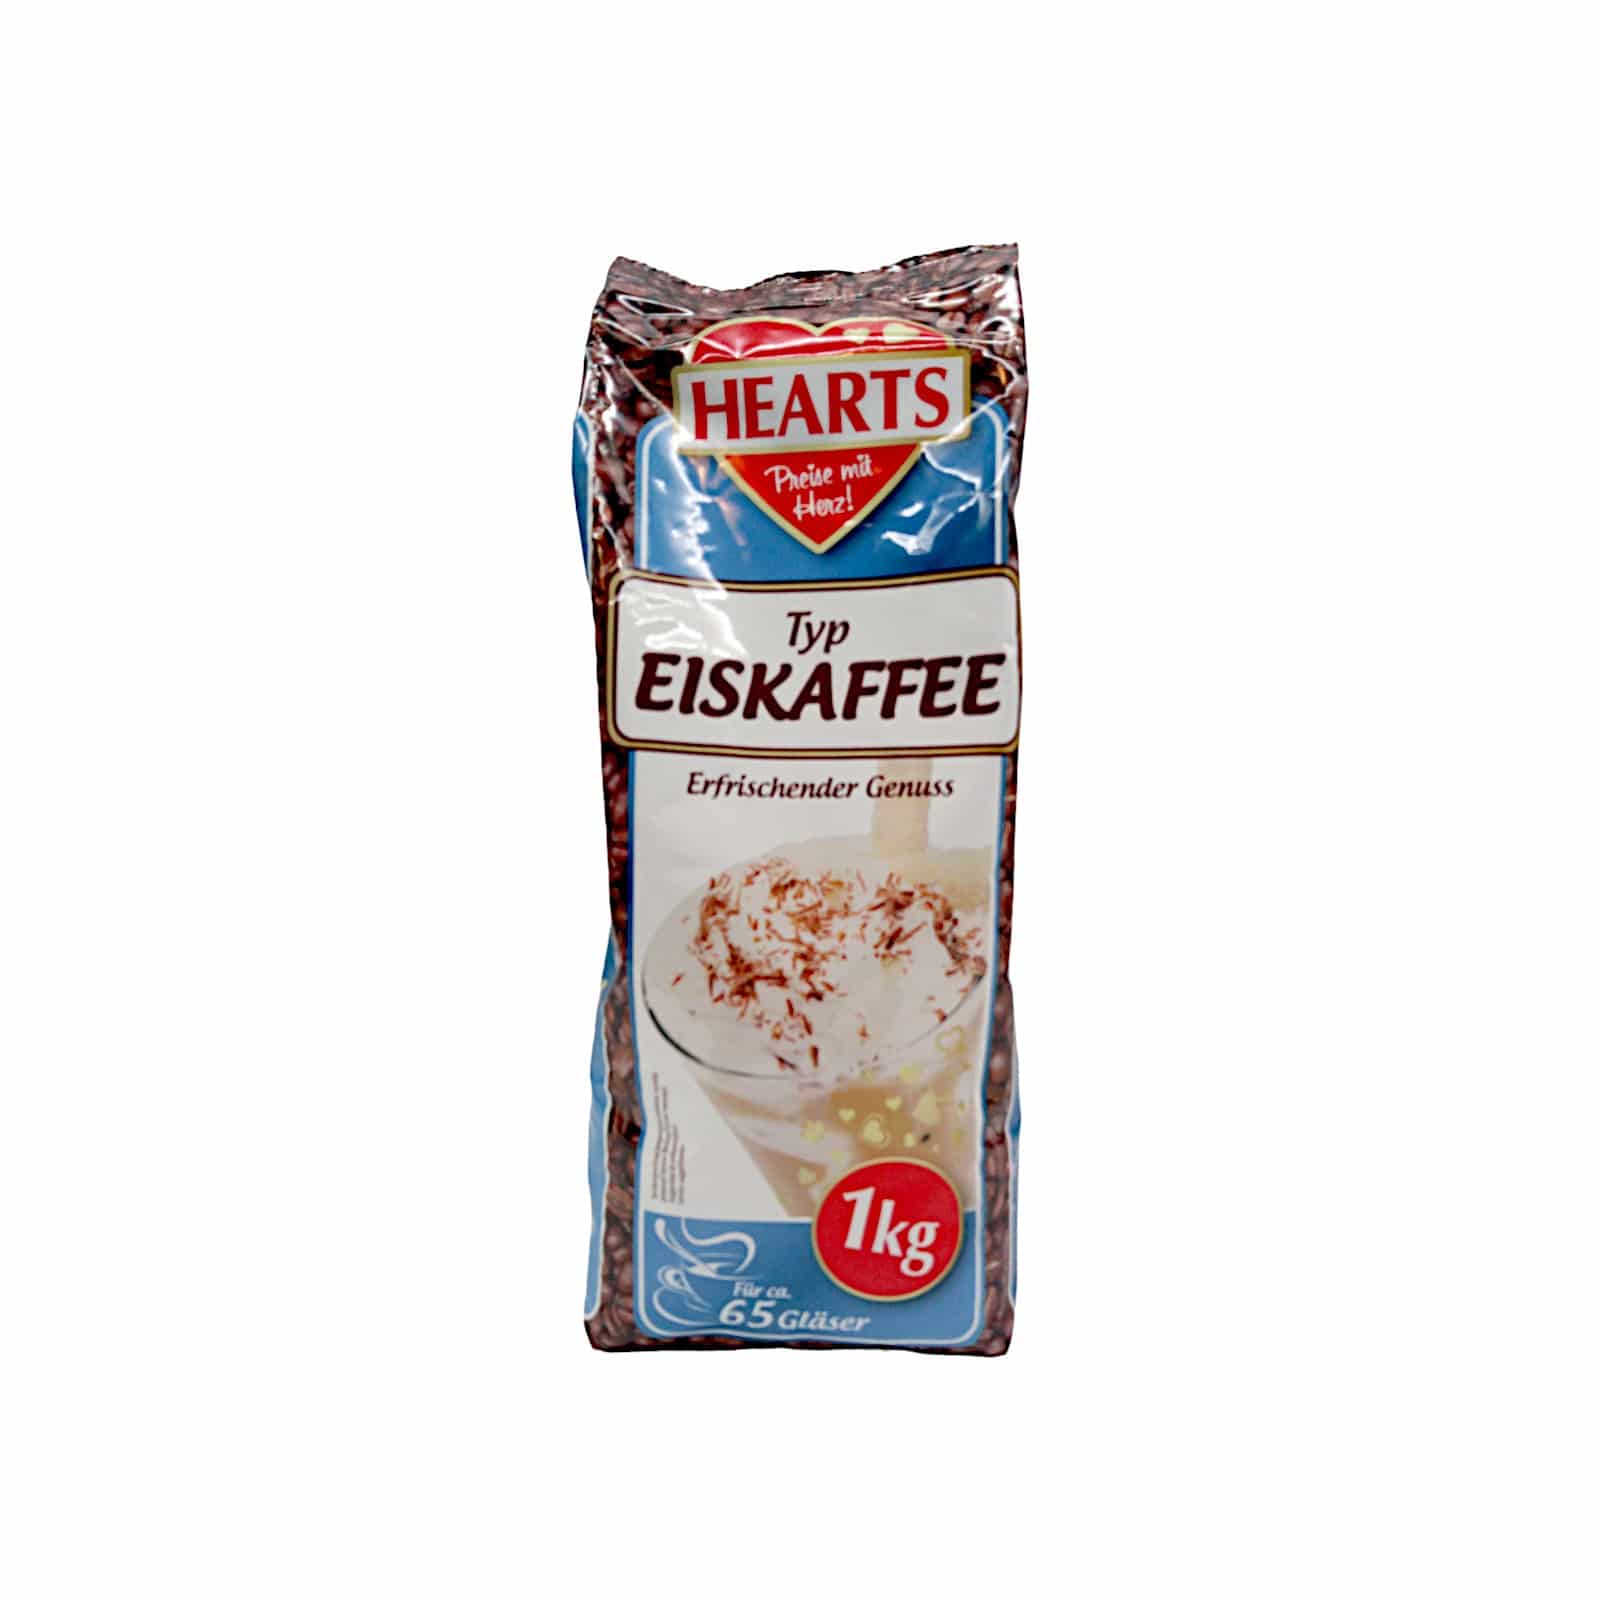 Hearts Typ Eiskaffee 1Kg